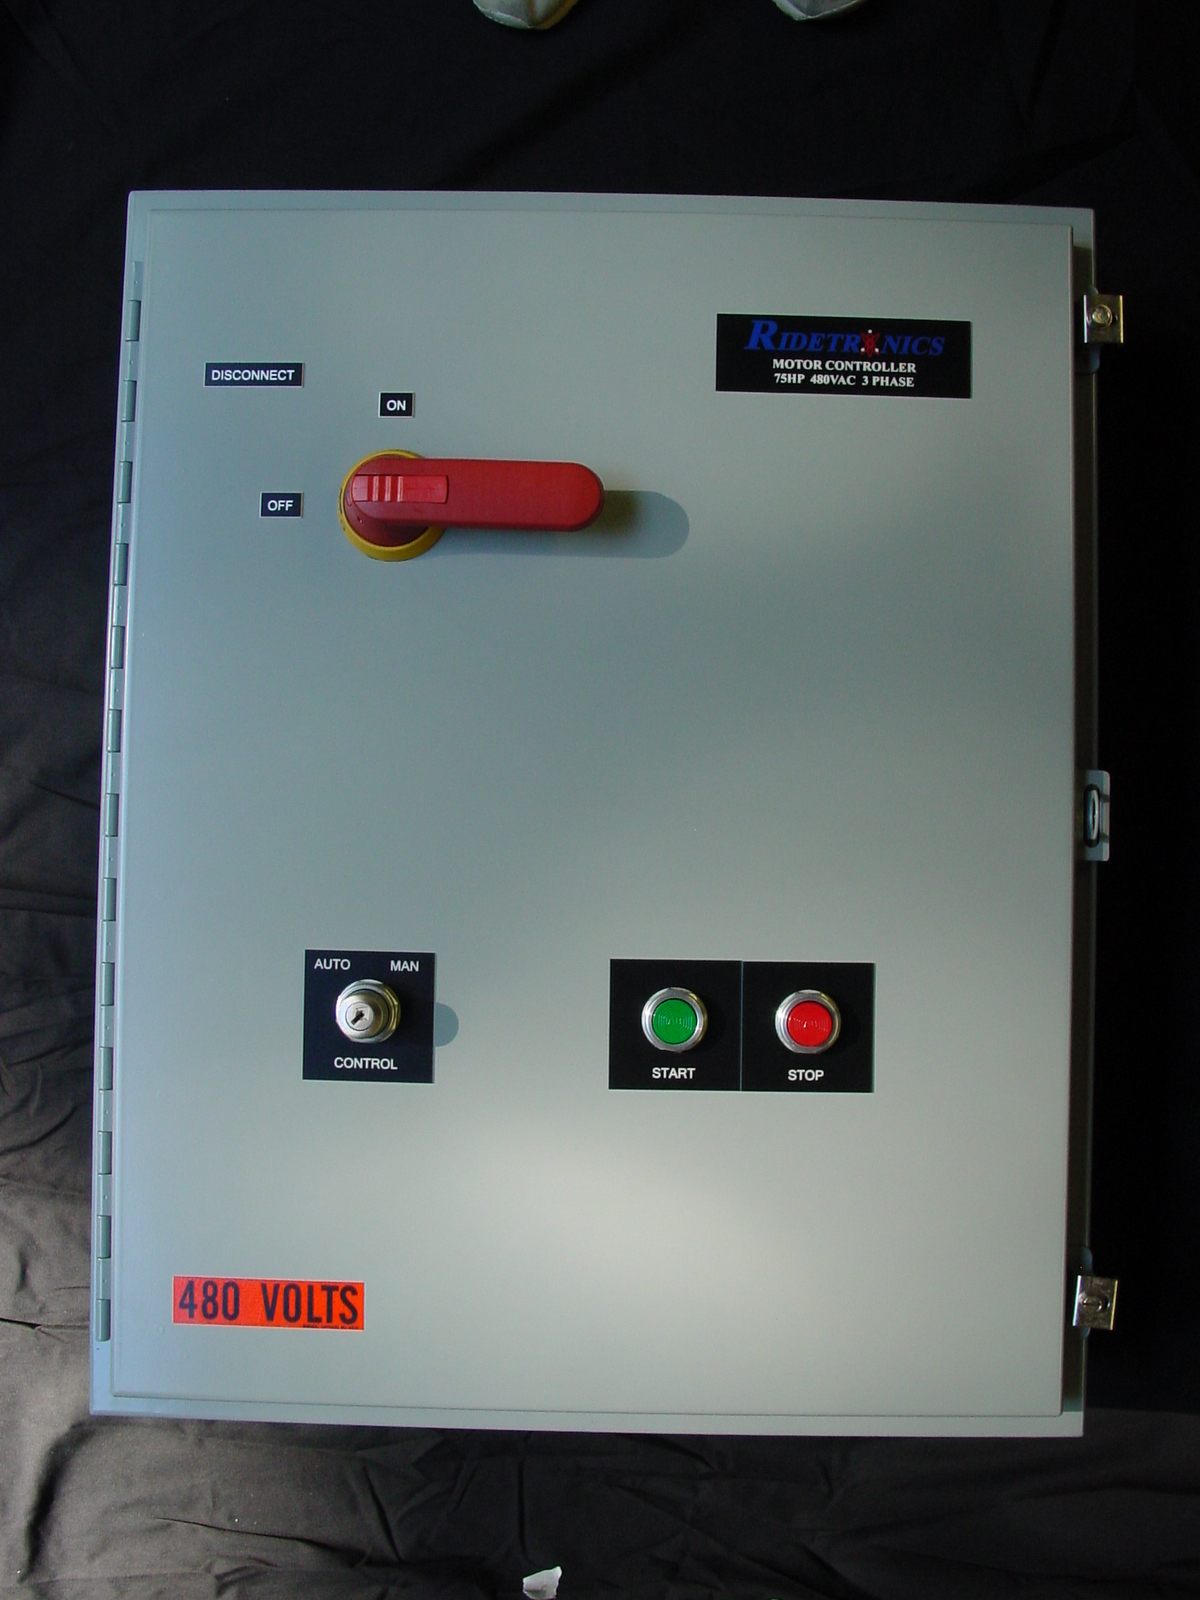 Sample of an AAR industrial control panel